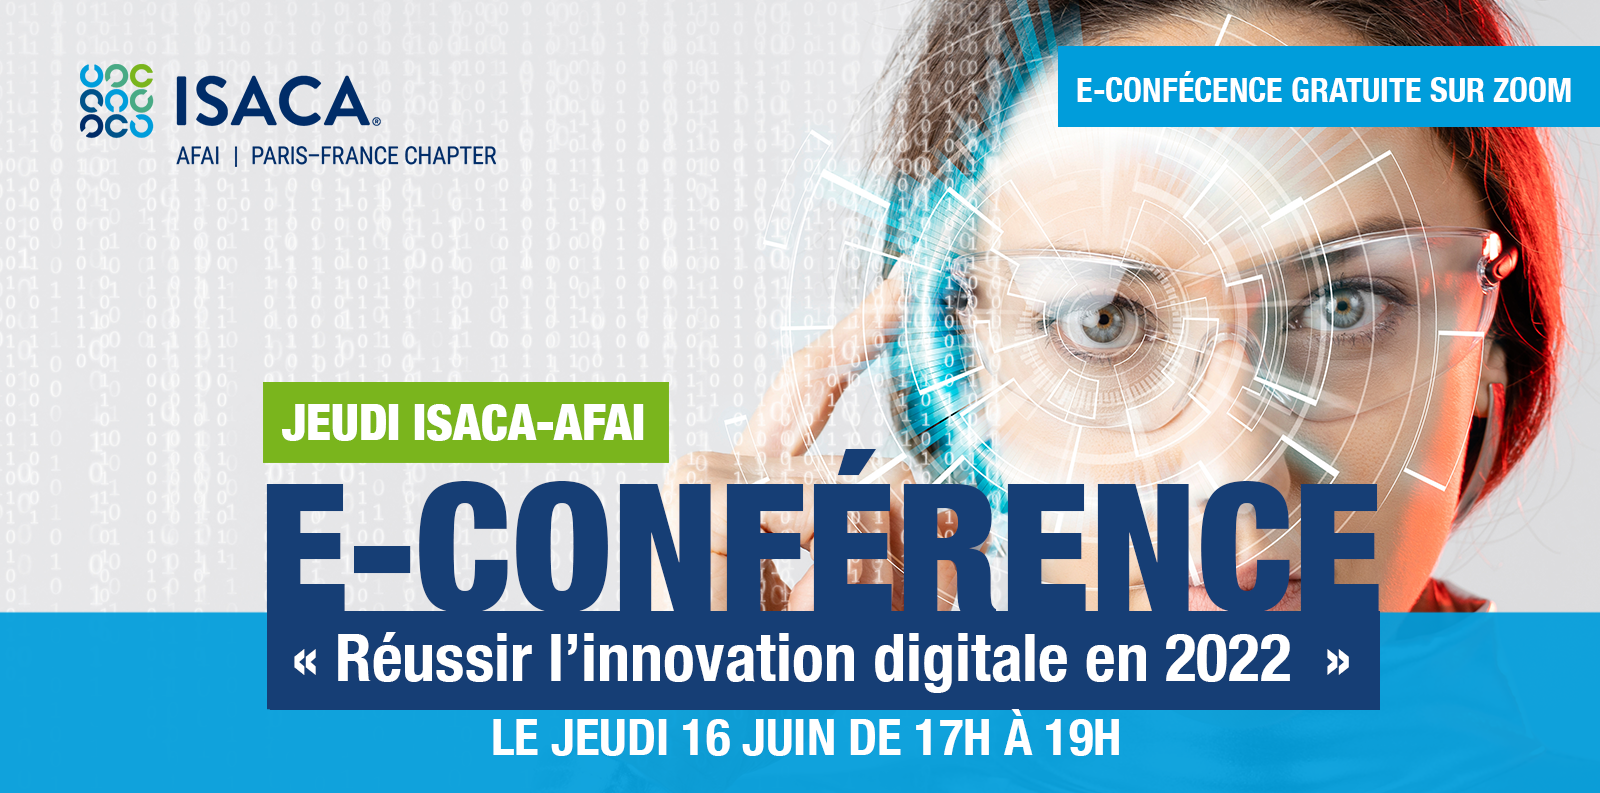 WEBINAR "Réussir l’innovation digitale en 2022" / Jeudi de l’ISACA-AFAI du 16 Juin